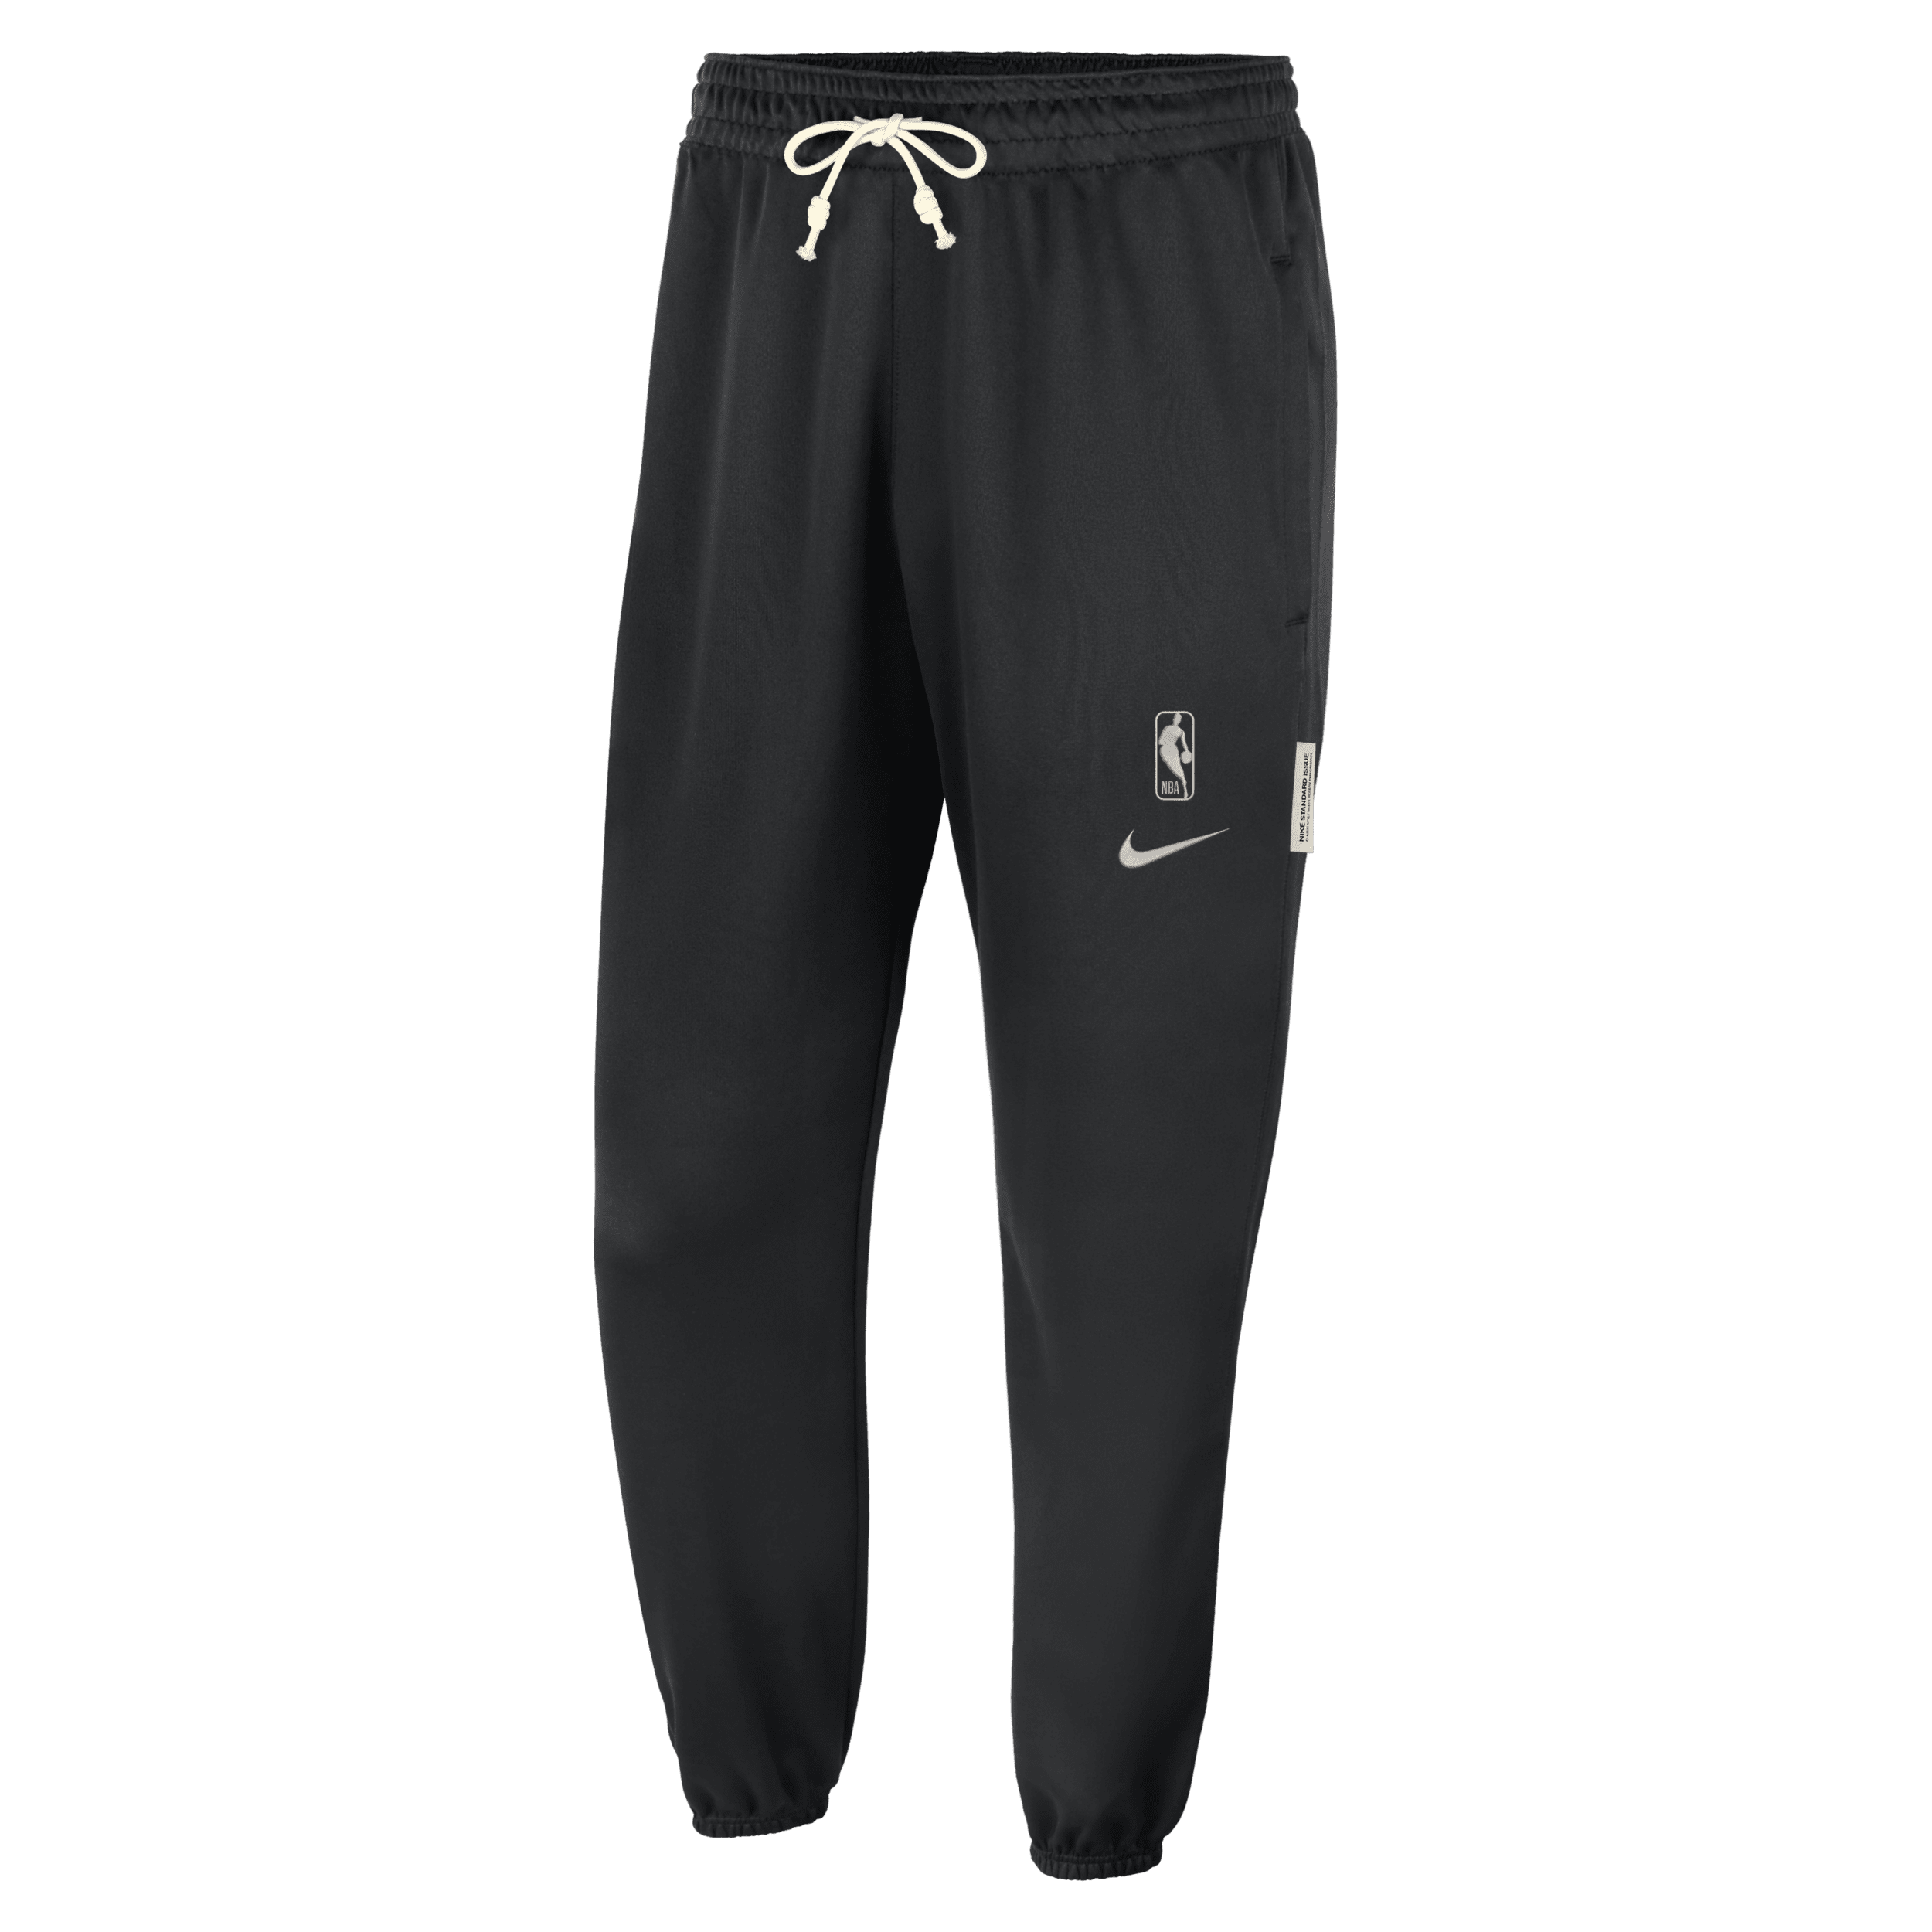 Pantaloni Team 31 Standard Issue Nike Dri-FIT NBA – Uomo - Nero